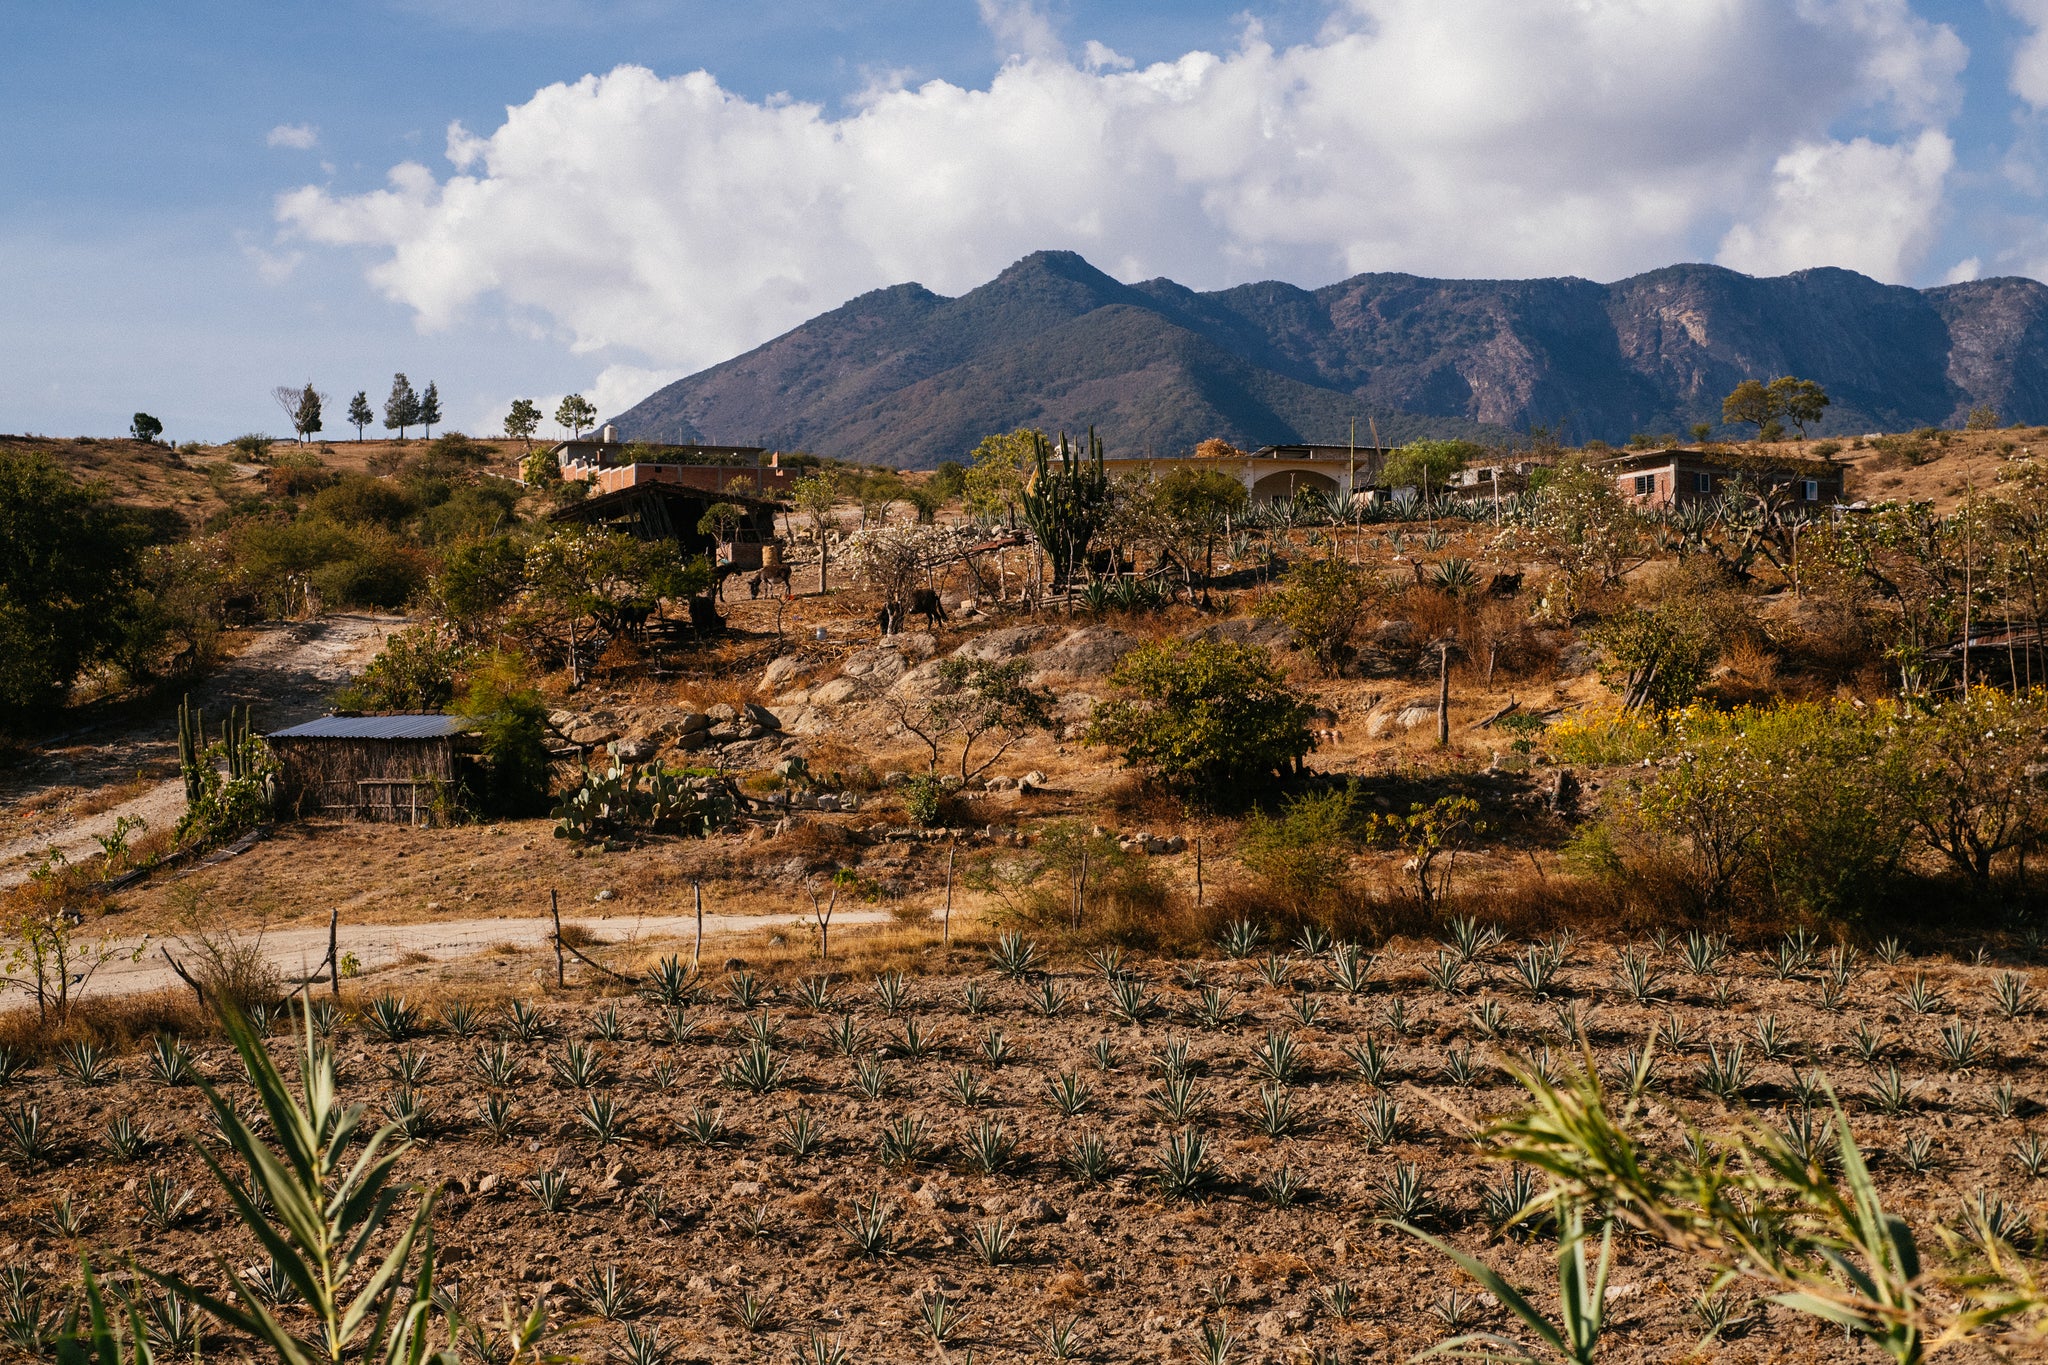 Travel Log: On the Road in Oaxaca with Karen Santos